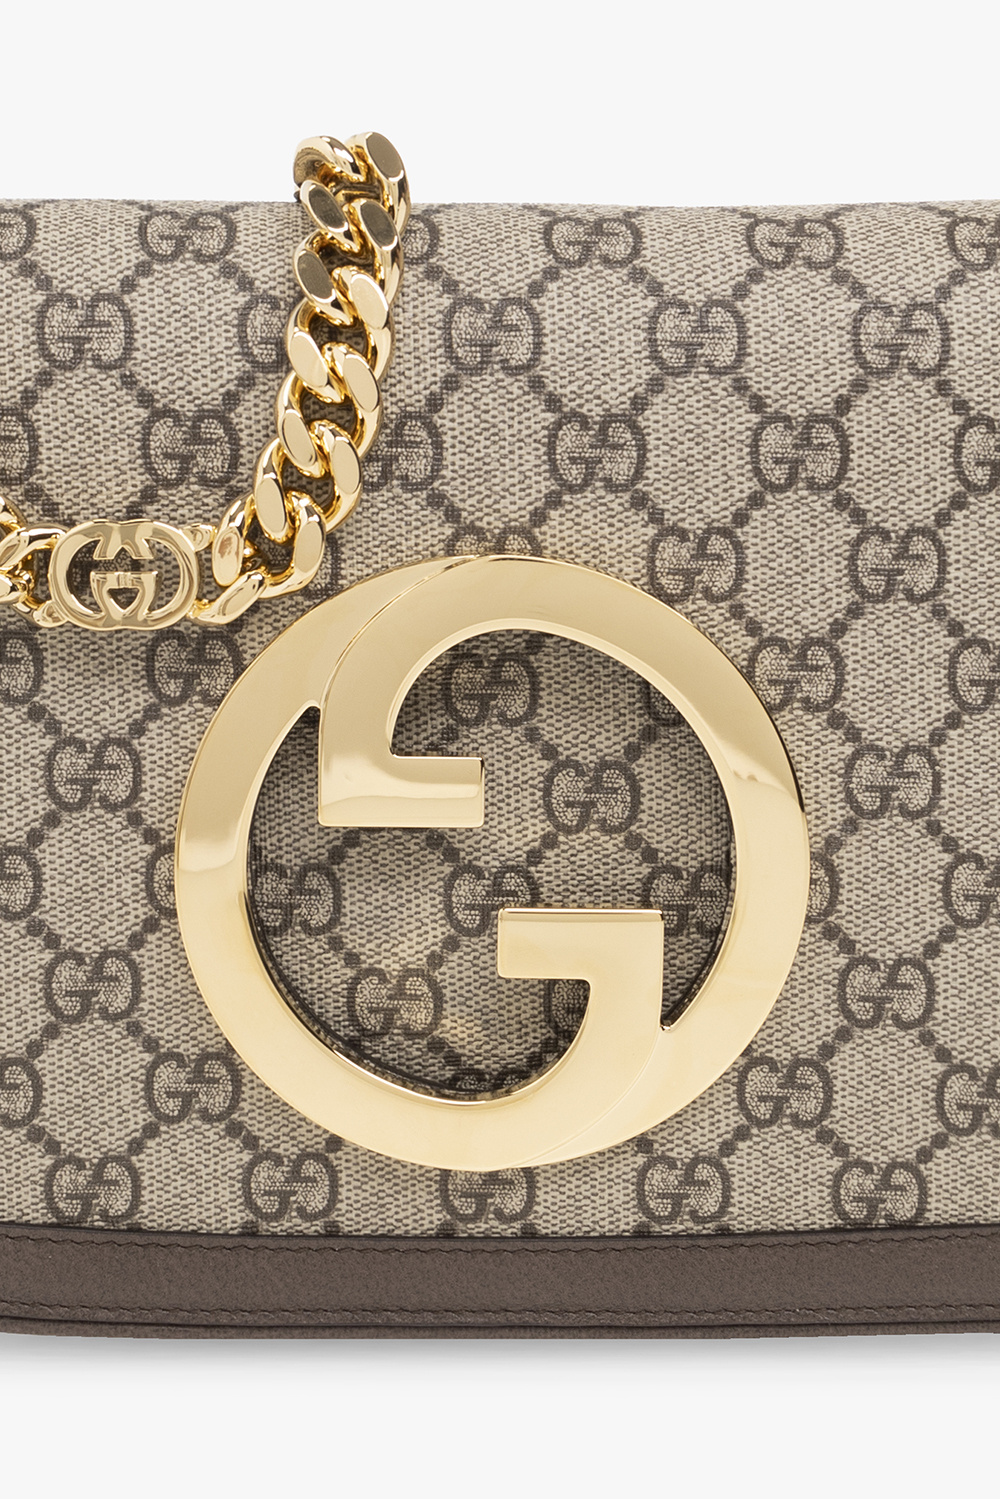 Gucci ‘Blondie’ shoulder bag